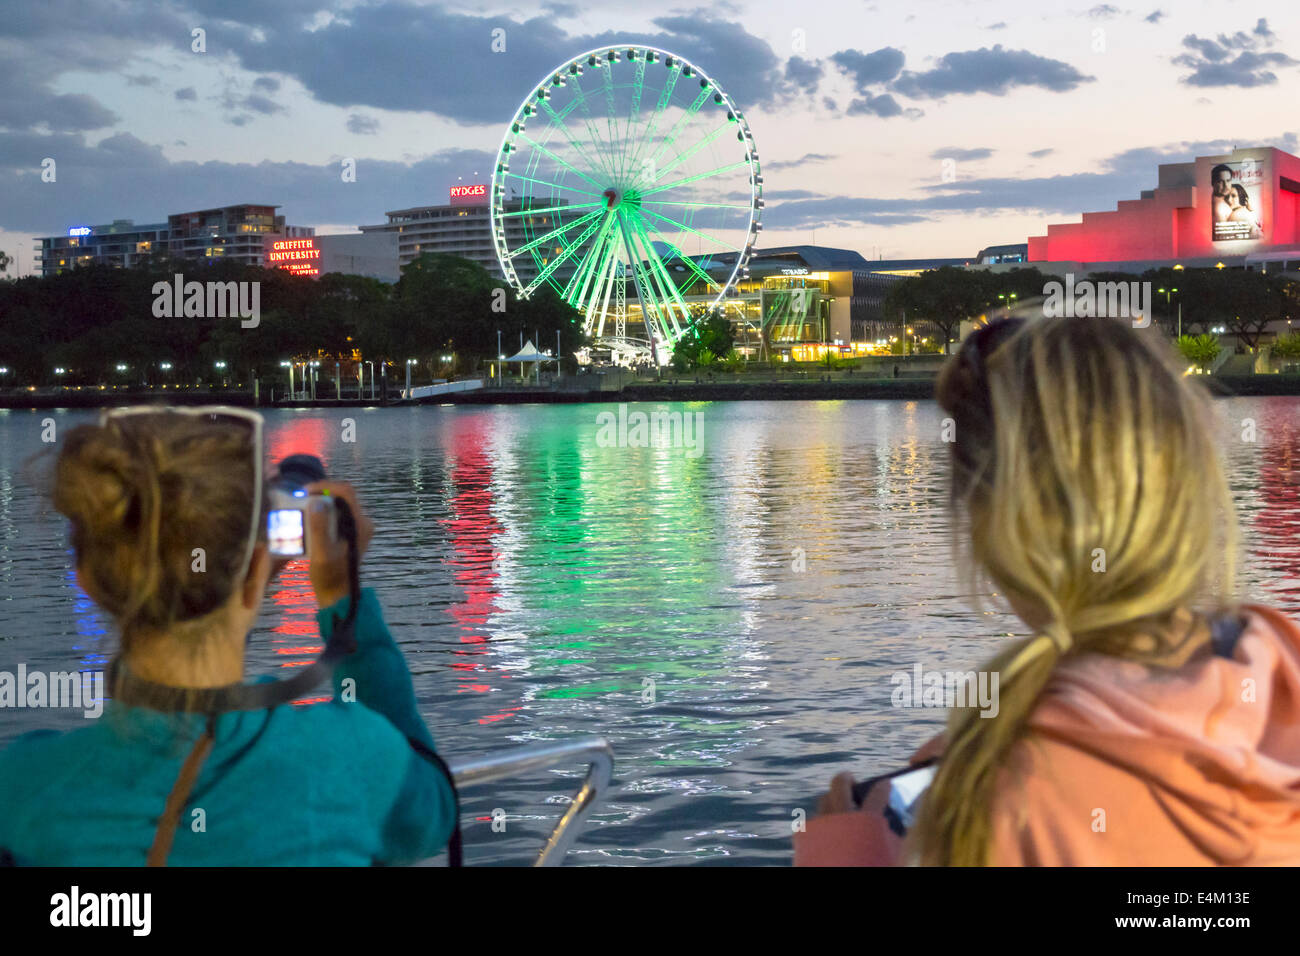 Brisbane Australia,Southbank,The Brisbane Wheel,Ferris,Brisbane River,Queensland Performing Arts Centre,center,dusk,night,CityCat,ferry,boat,TransLink Stock Photo